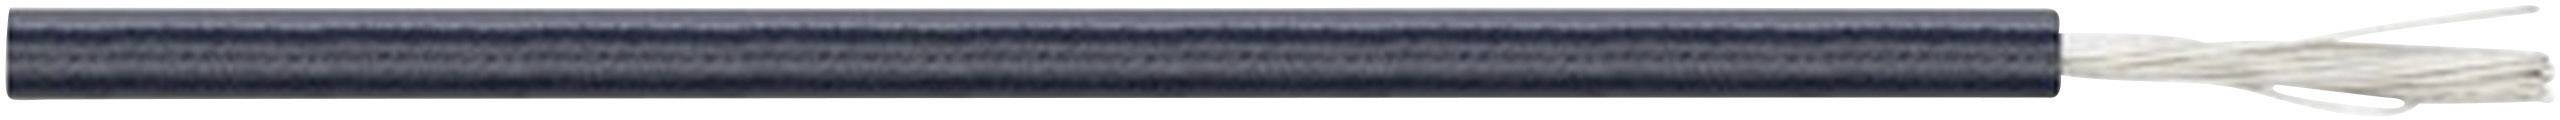 LAPP KABEL Litze Multi-Standard SC 1 1 x 0.75 mm² Blau LappKabel 4180502 100 m